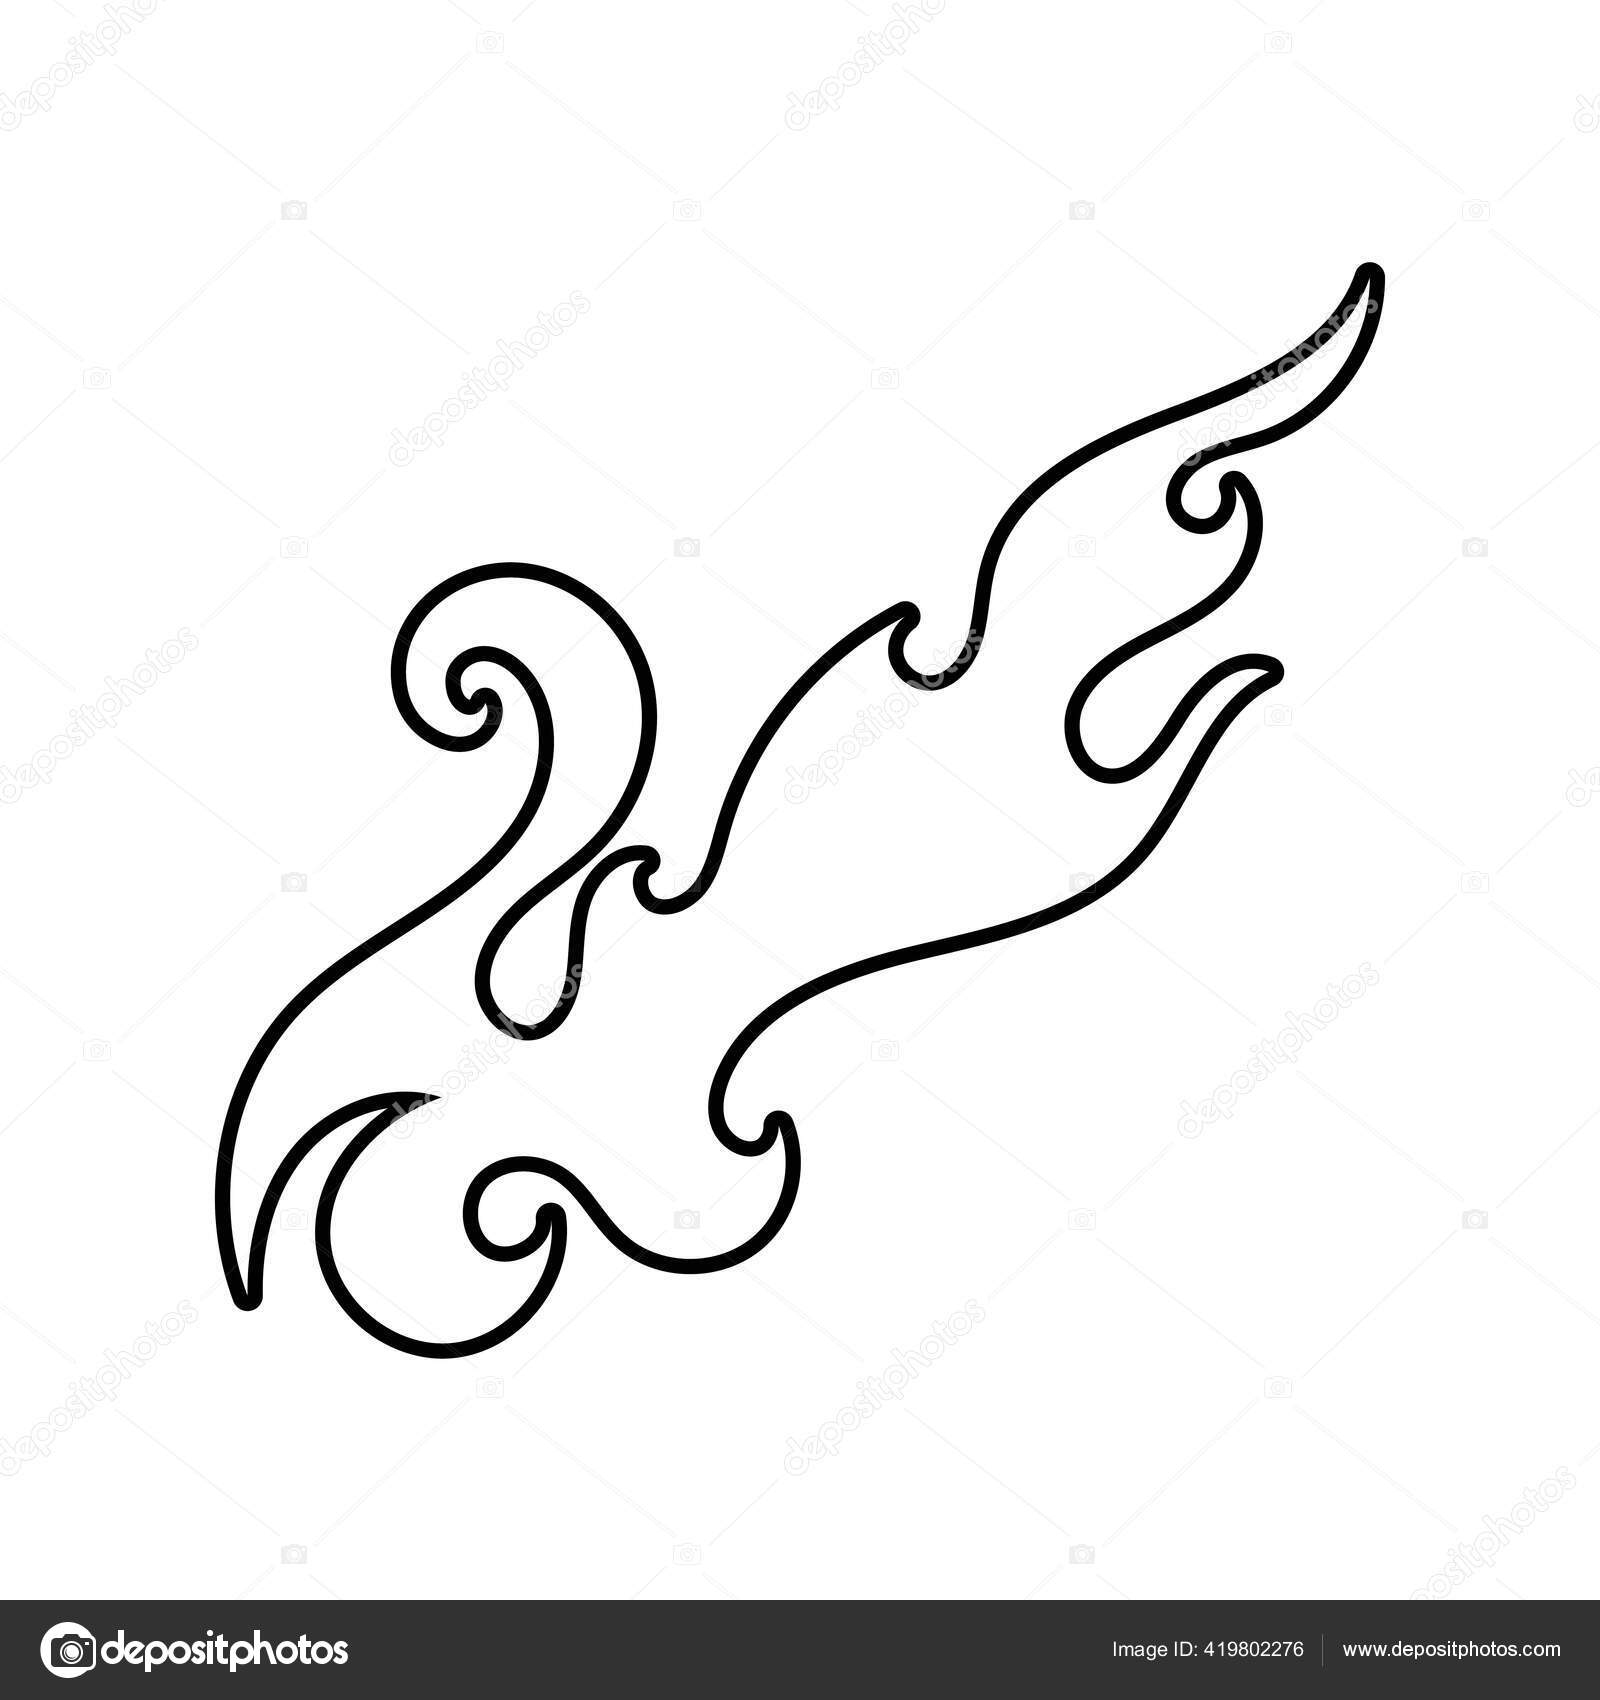 Fire minimalist tattoo stock vector. Illustration of flame - 272091018